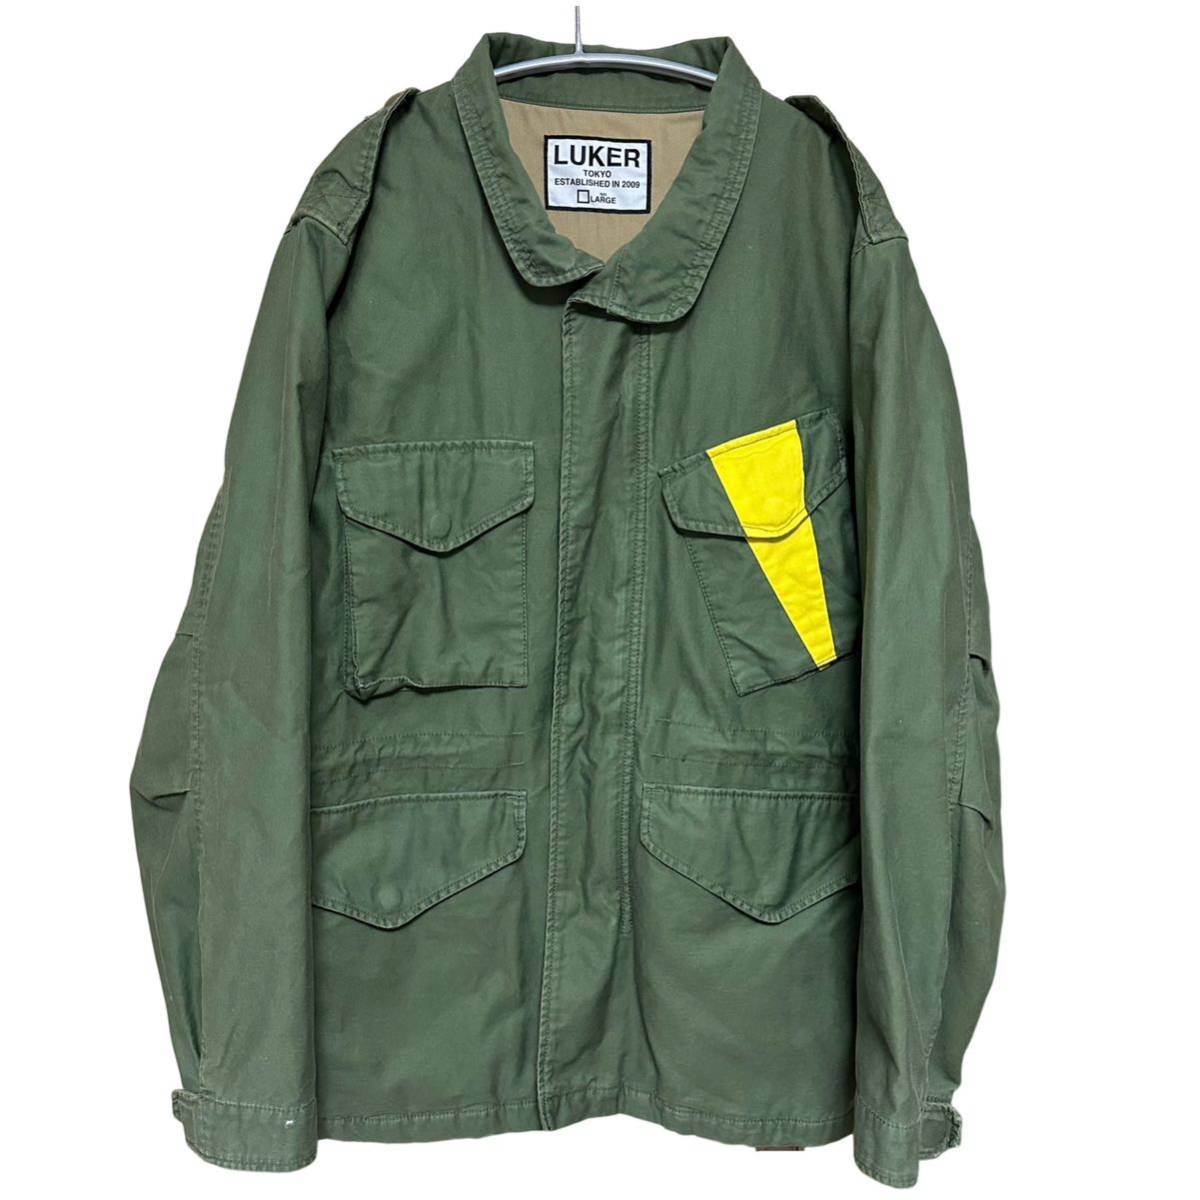  beautiful goods LUKER by NEIGHBORHOOD Roo car bai Neighborhood M-65 back print L size military jacket 